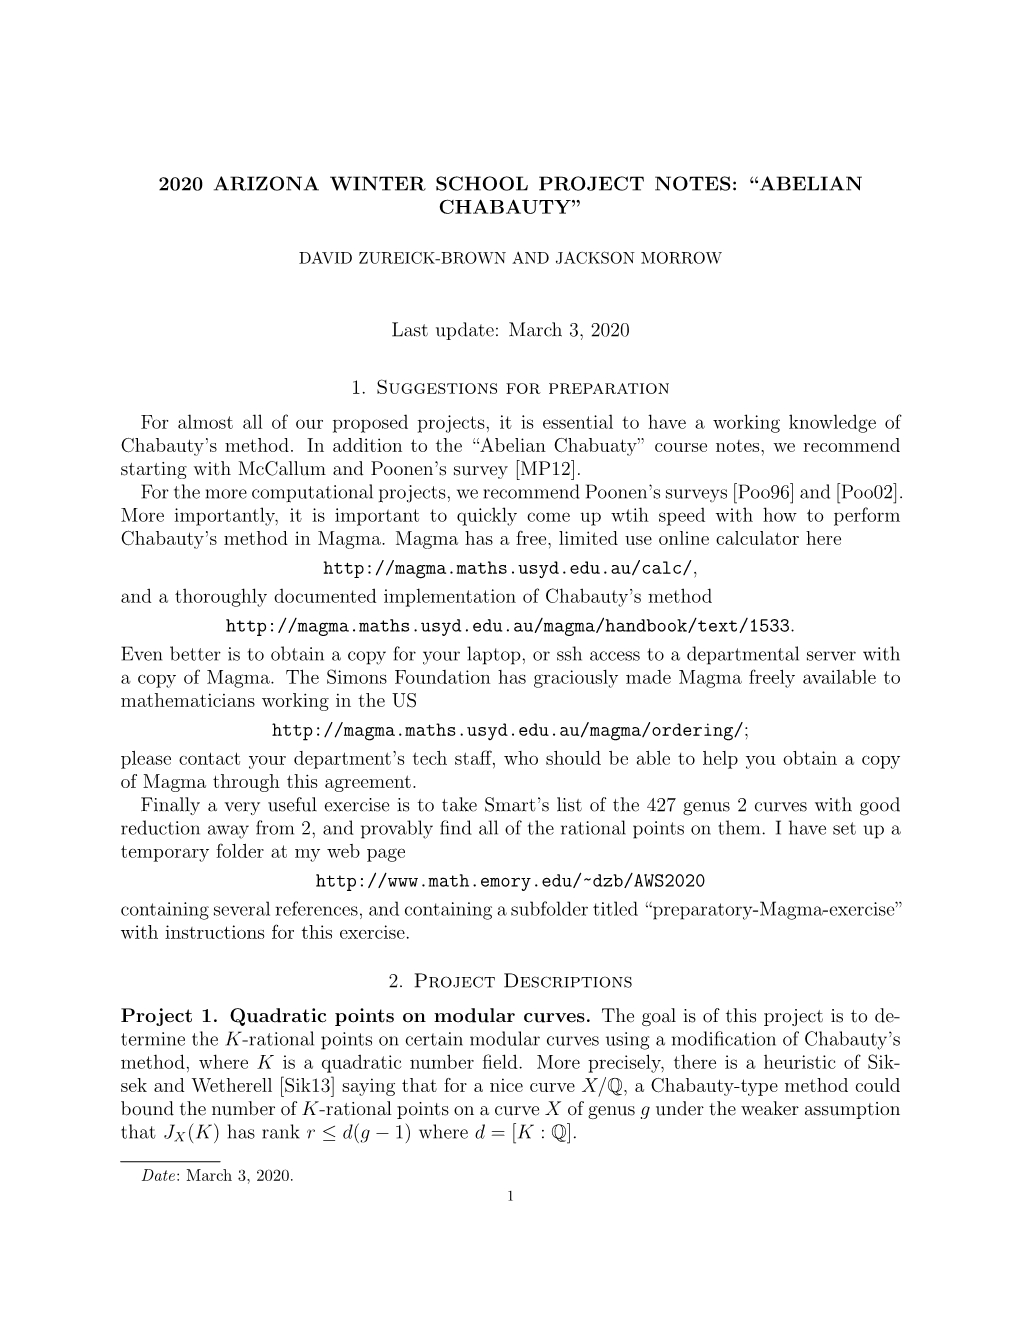 2020 Arizona Winter School Project Notes: “Abelian Chabauty”